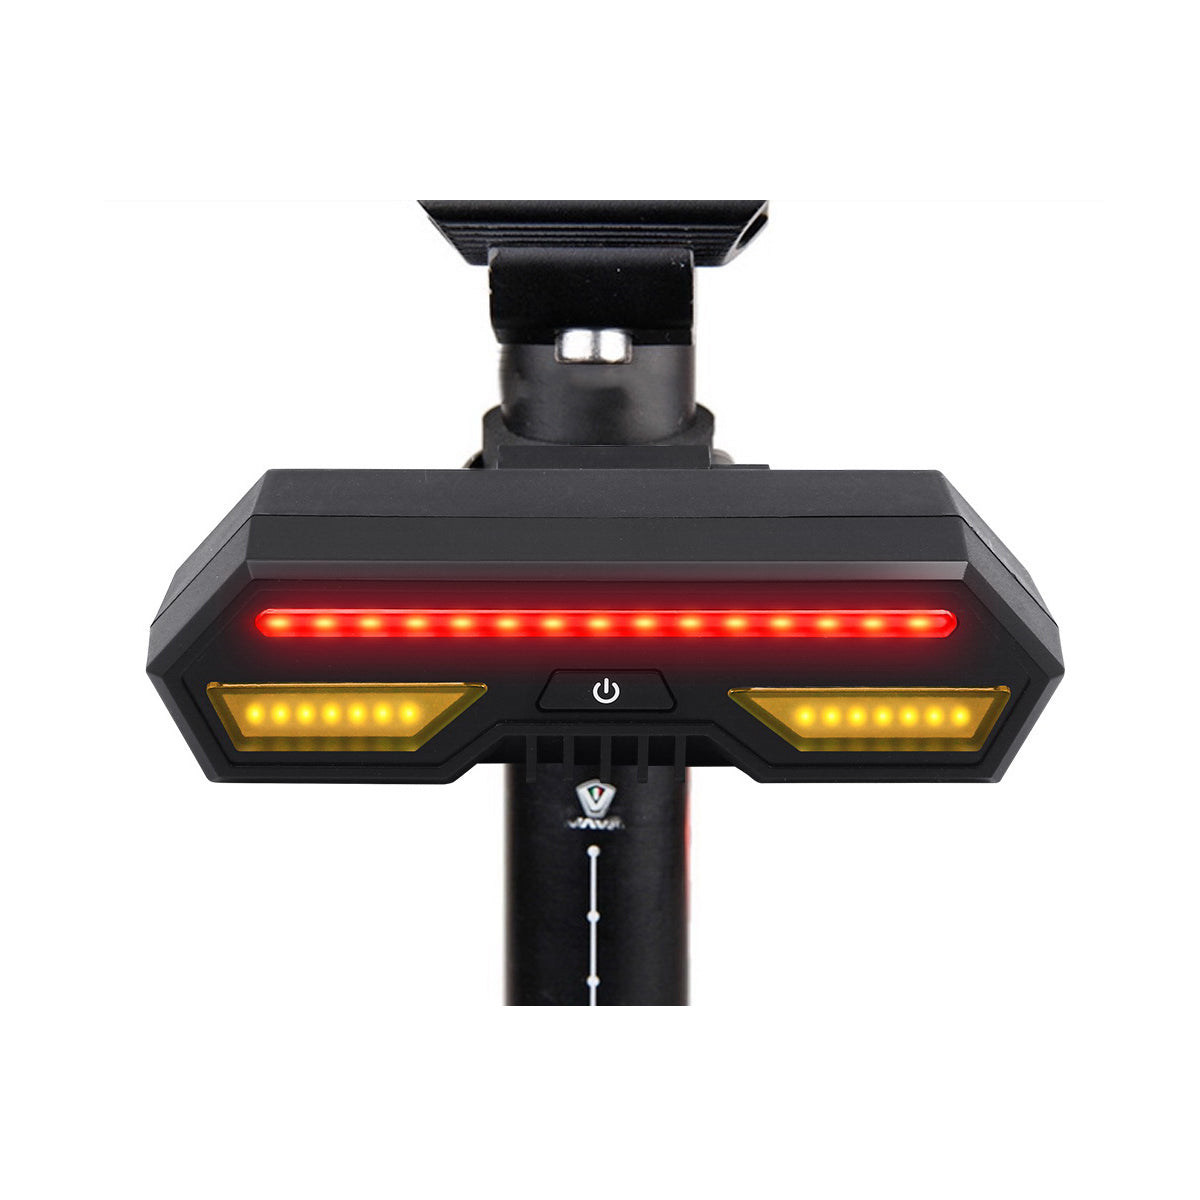 XANES STL09 Bike Turn Signal LED Light Cycling Bicycle USB Waterproof Remote Control Bike Tail Light